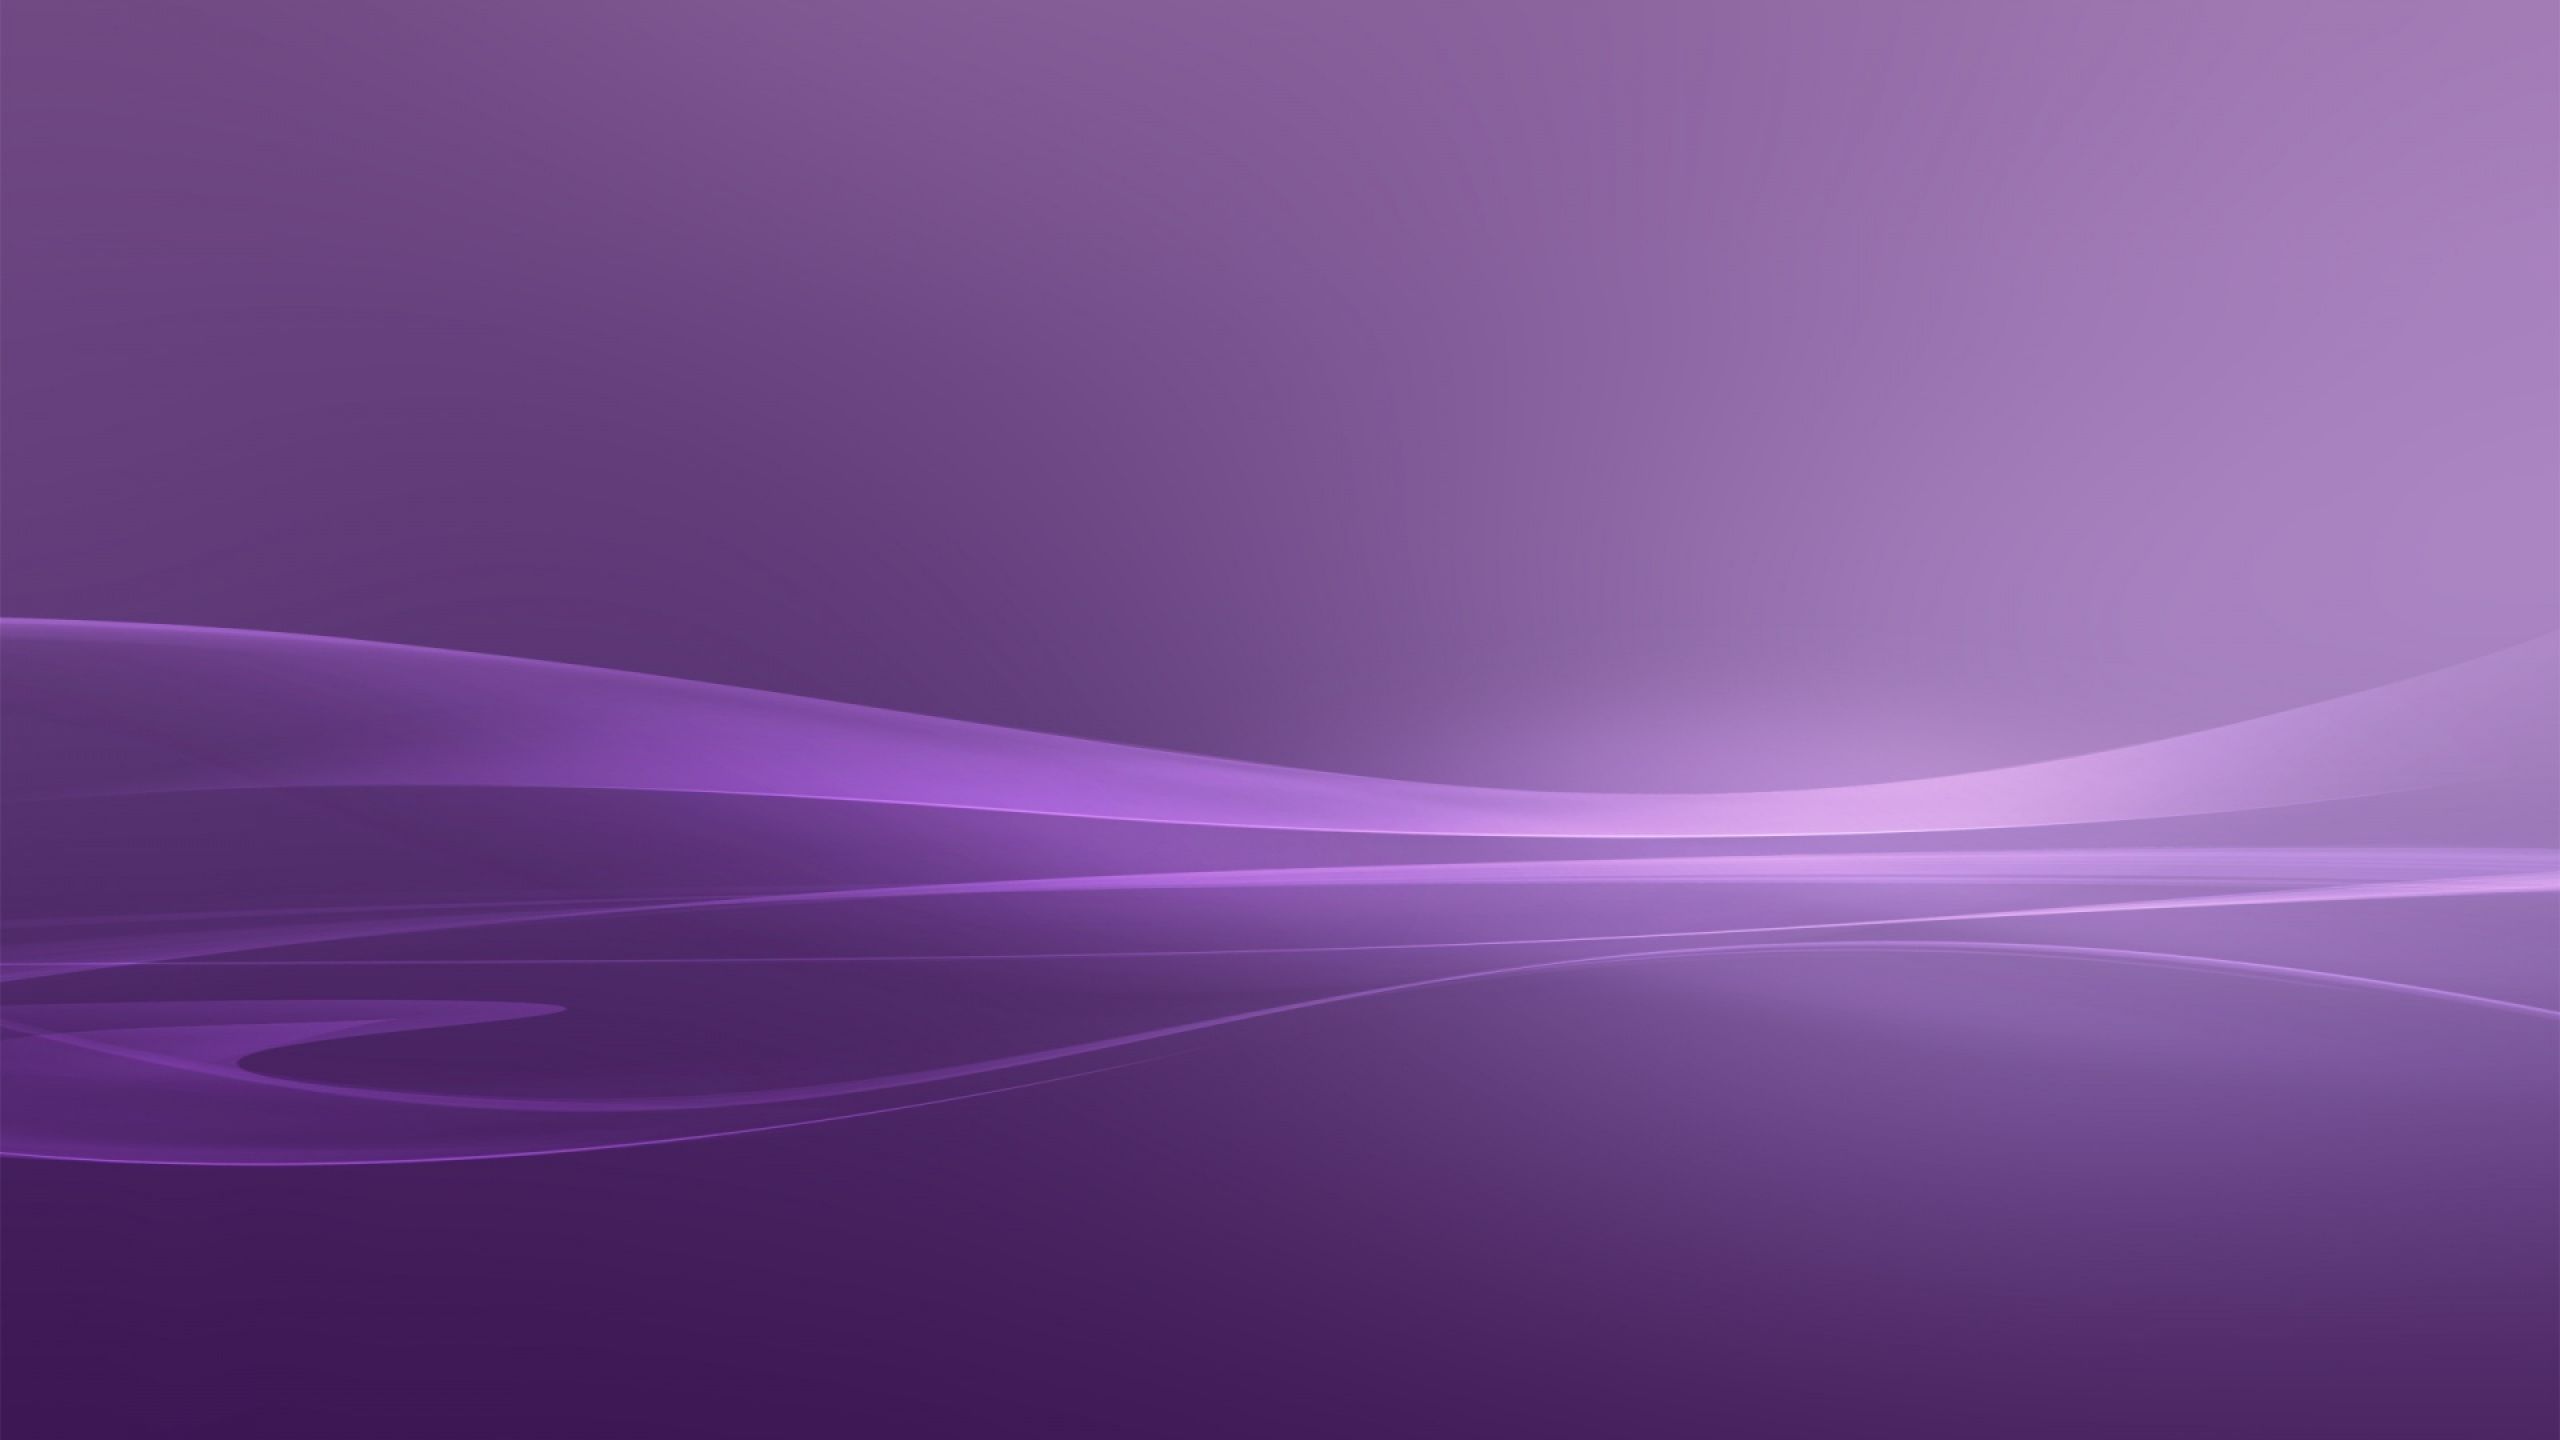 Download Wallpaper 2560x1440 Purple, Light, Solid, Lines Mac iMac ...